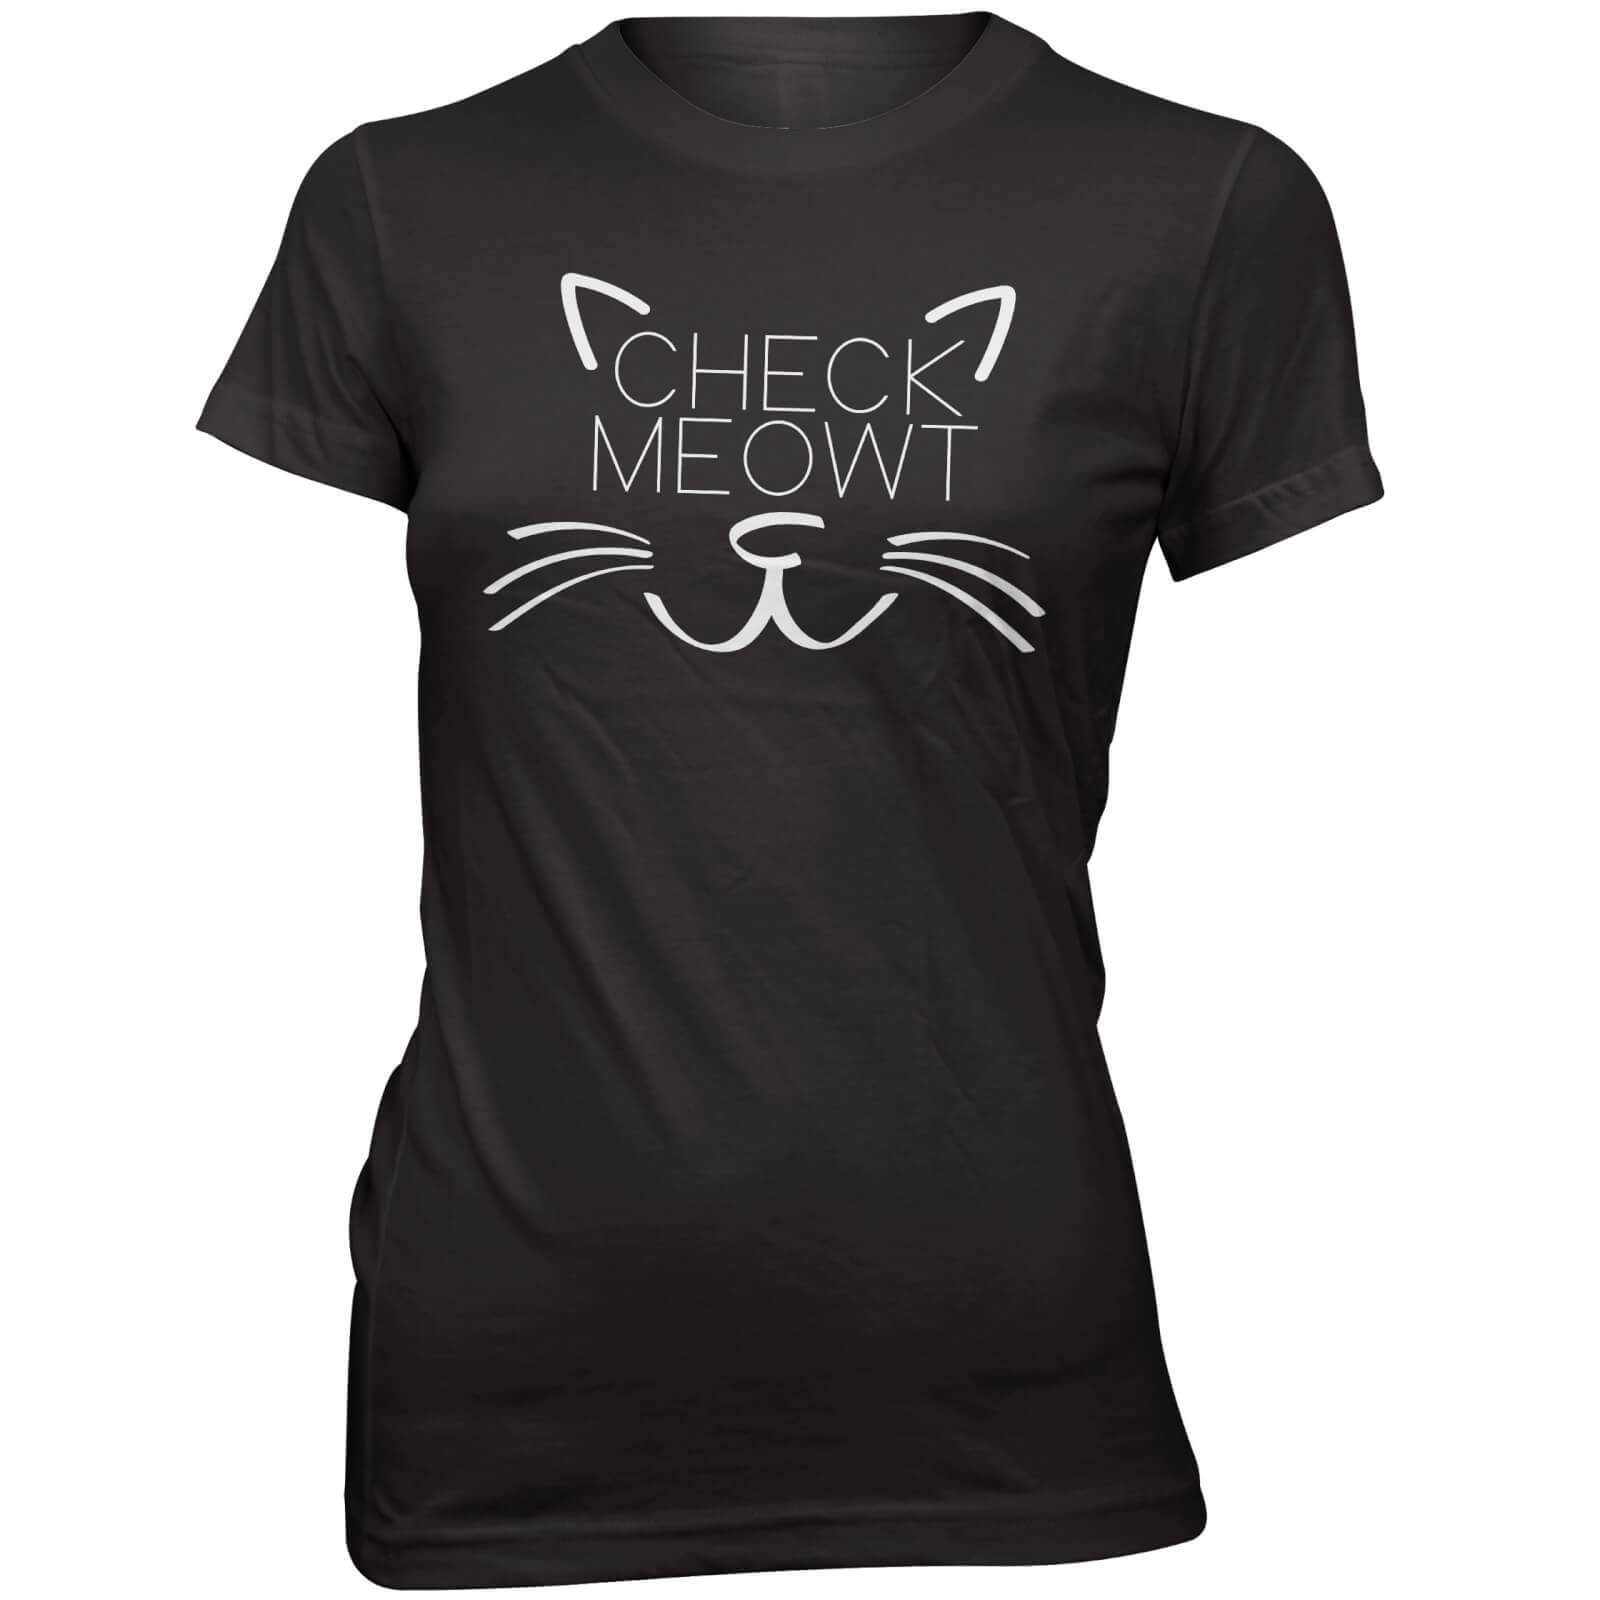 Check Meowt Women's Slogan T-Shirt - S - Black